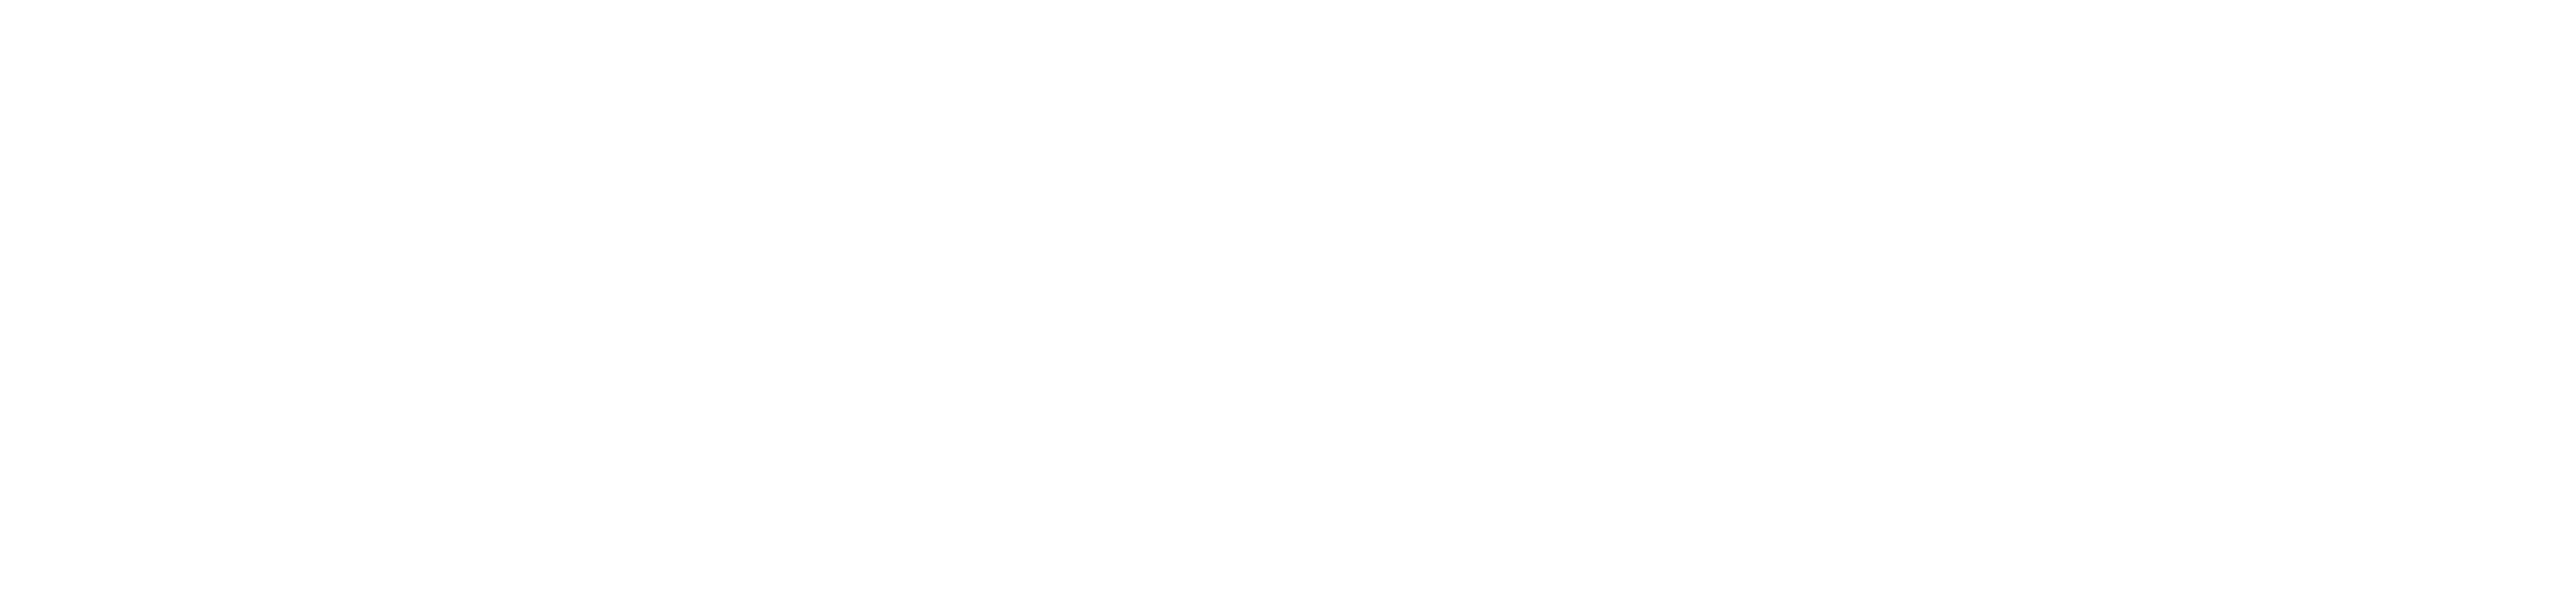 Metaphor Lab Amsterdam